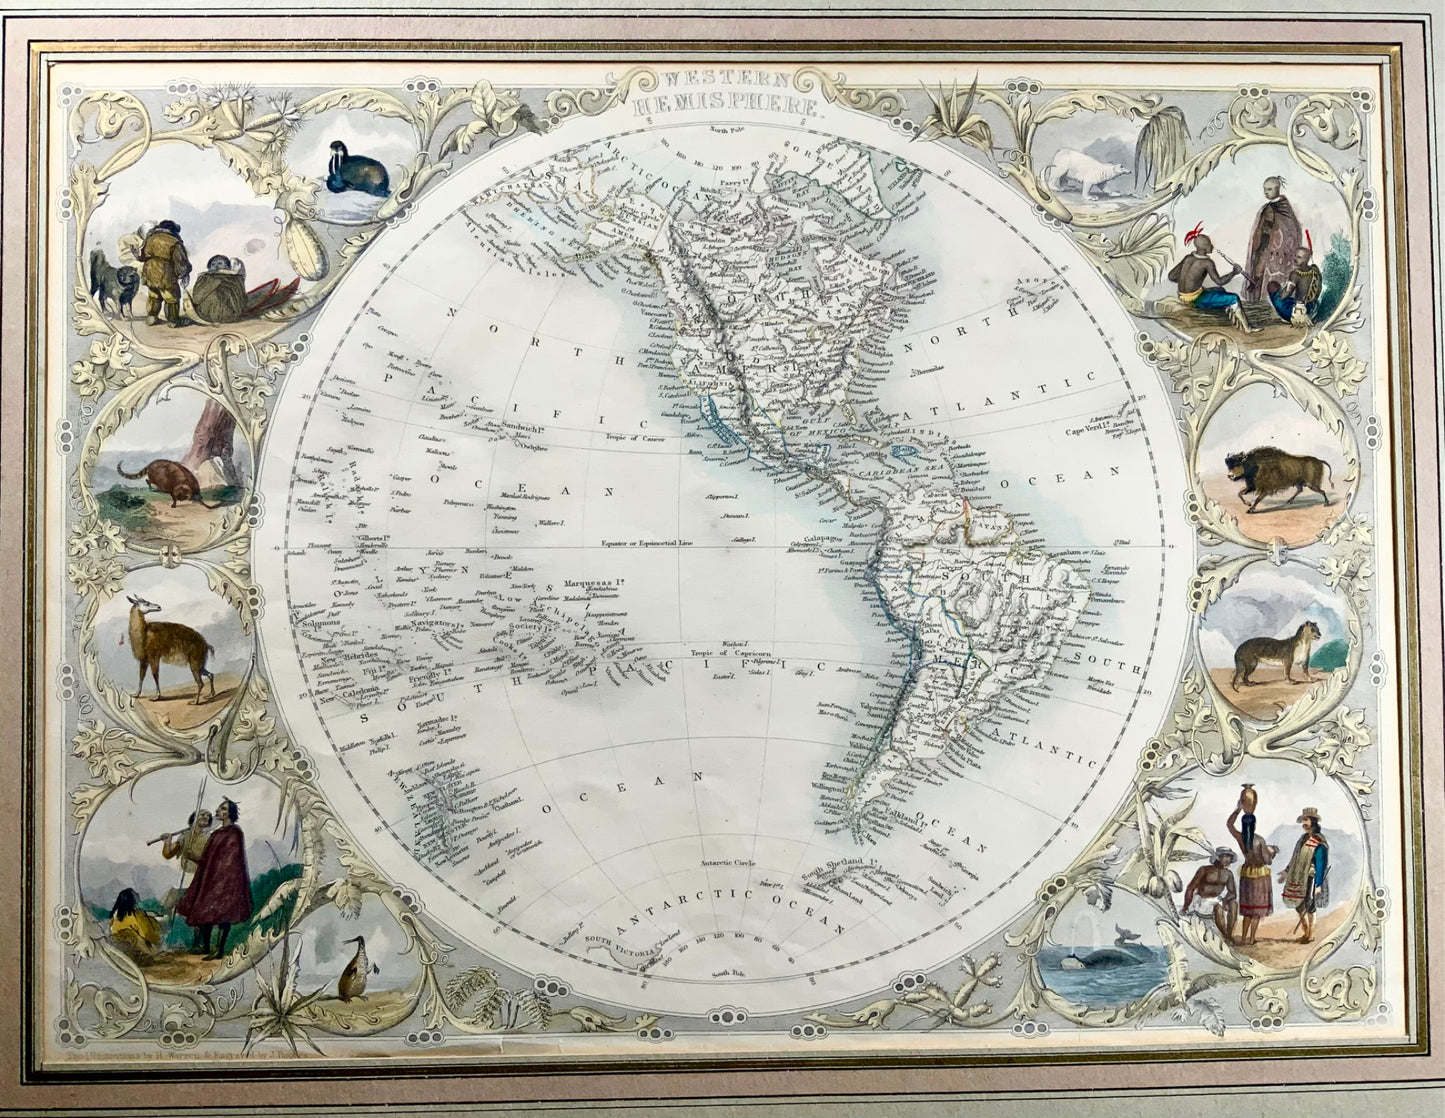 1851 America, emisfero occidentale, Tallis, mappa opaca colorata a mano